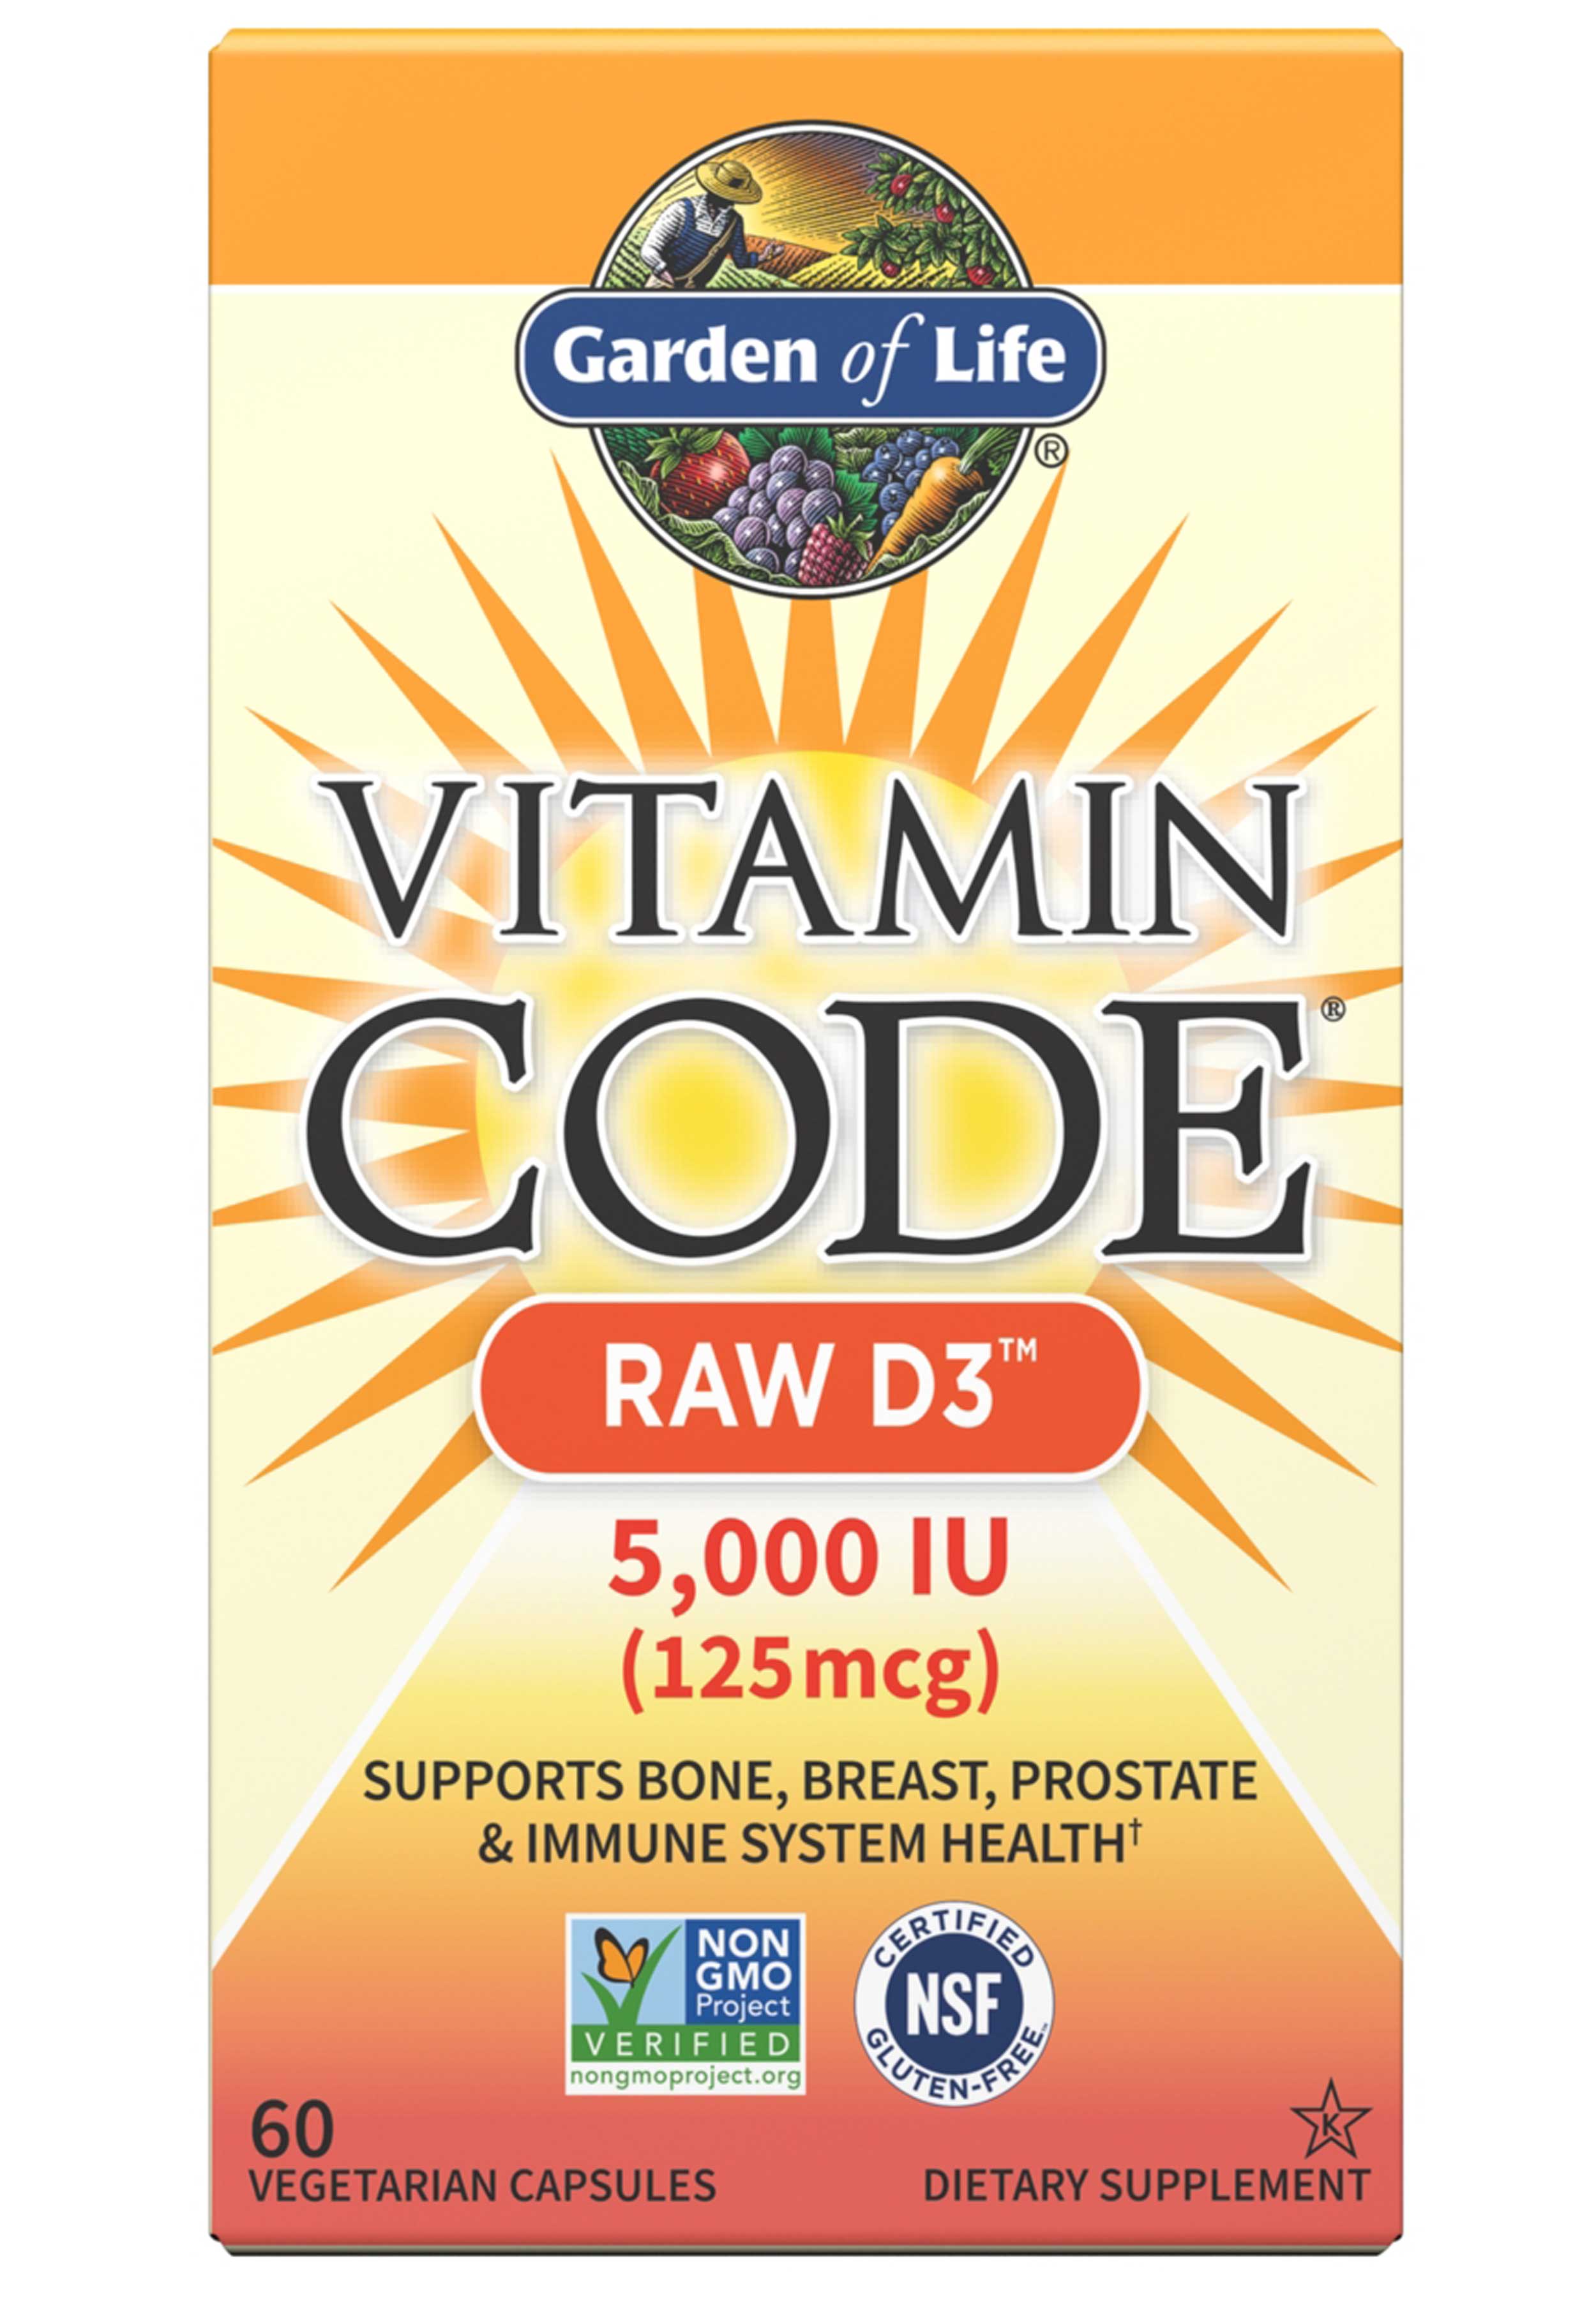 Garden of Life Vitamin Code RAW D3 5,000 IU